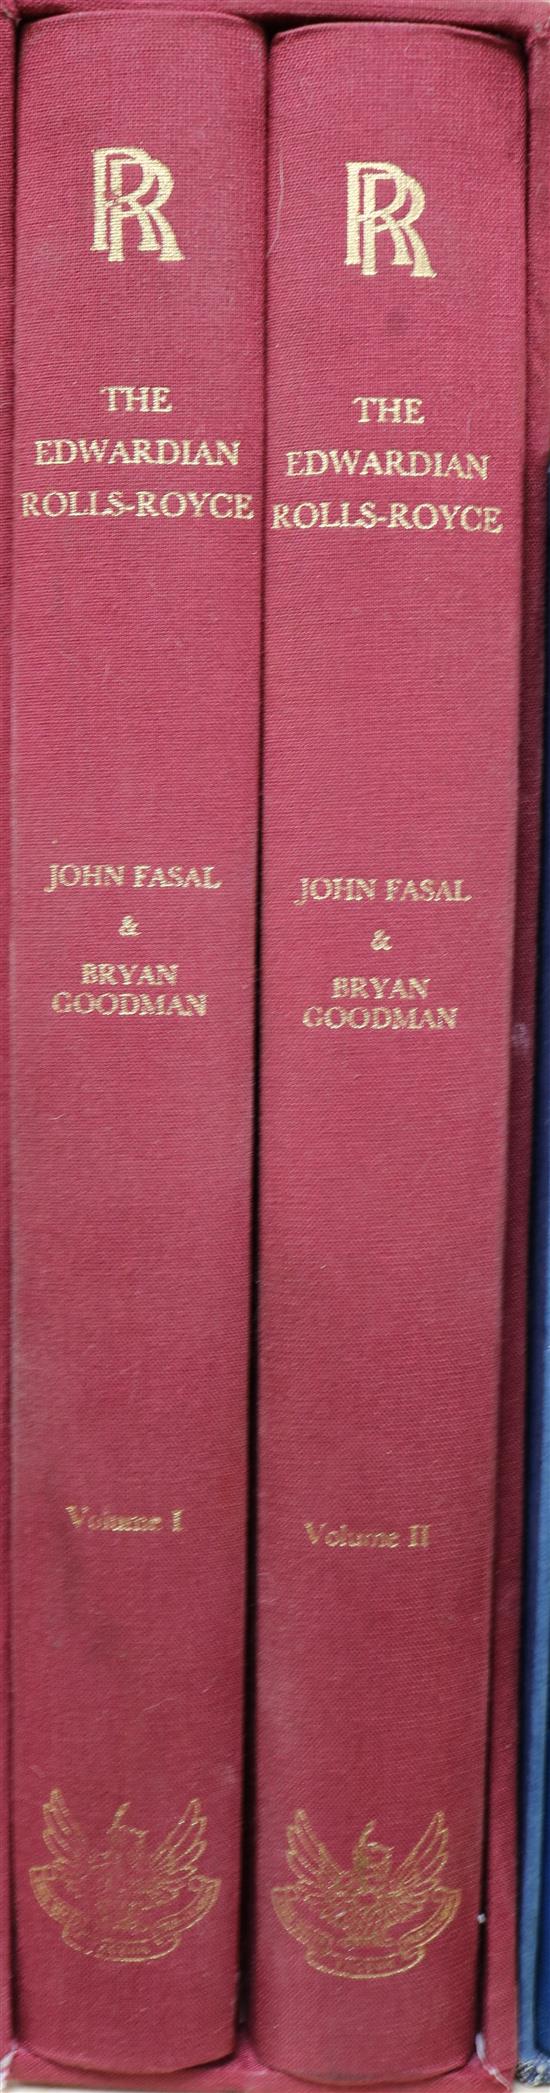 Fasal, John M and Goodman, Bryan - The Edwardian Rolls Royce,